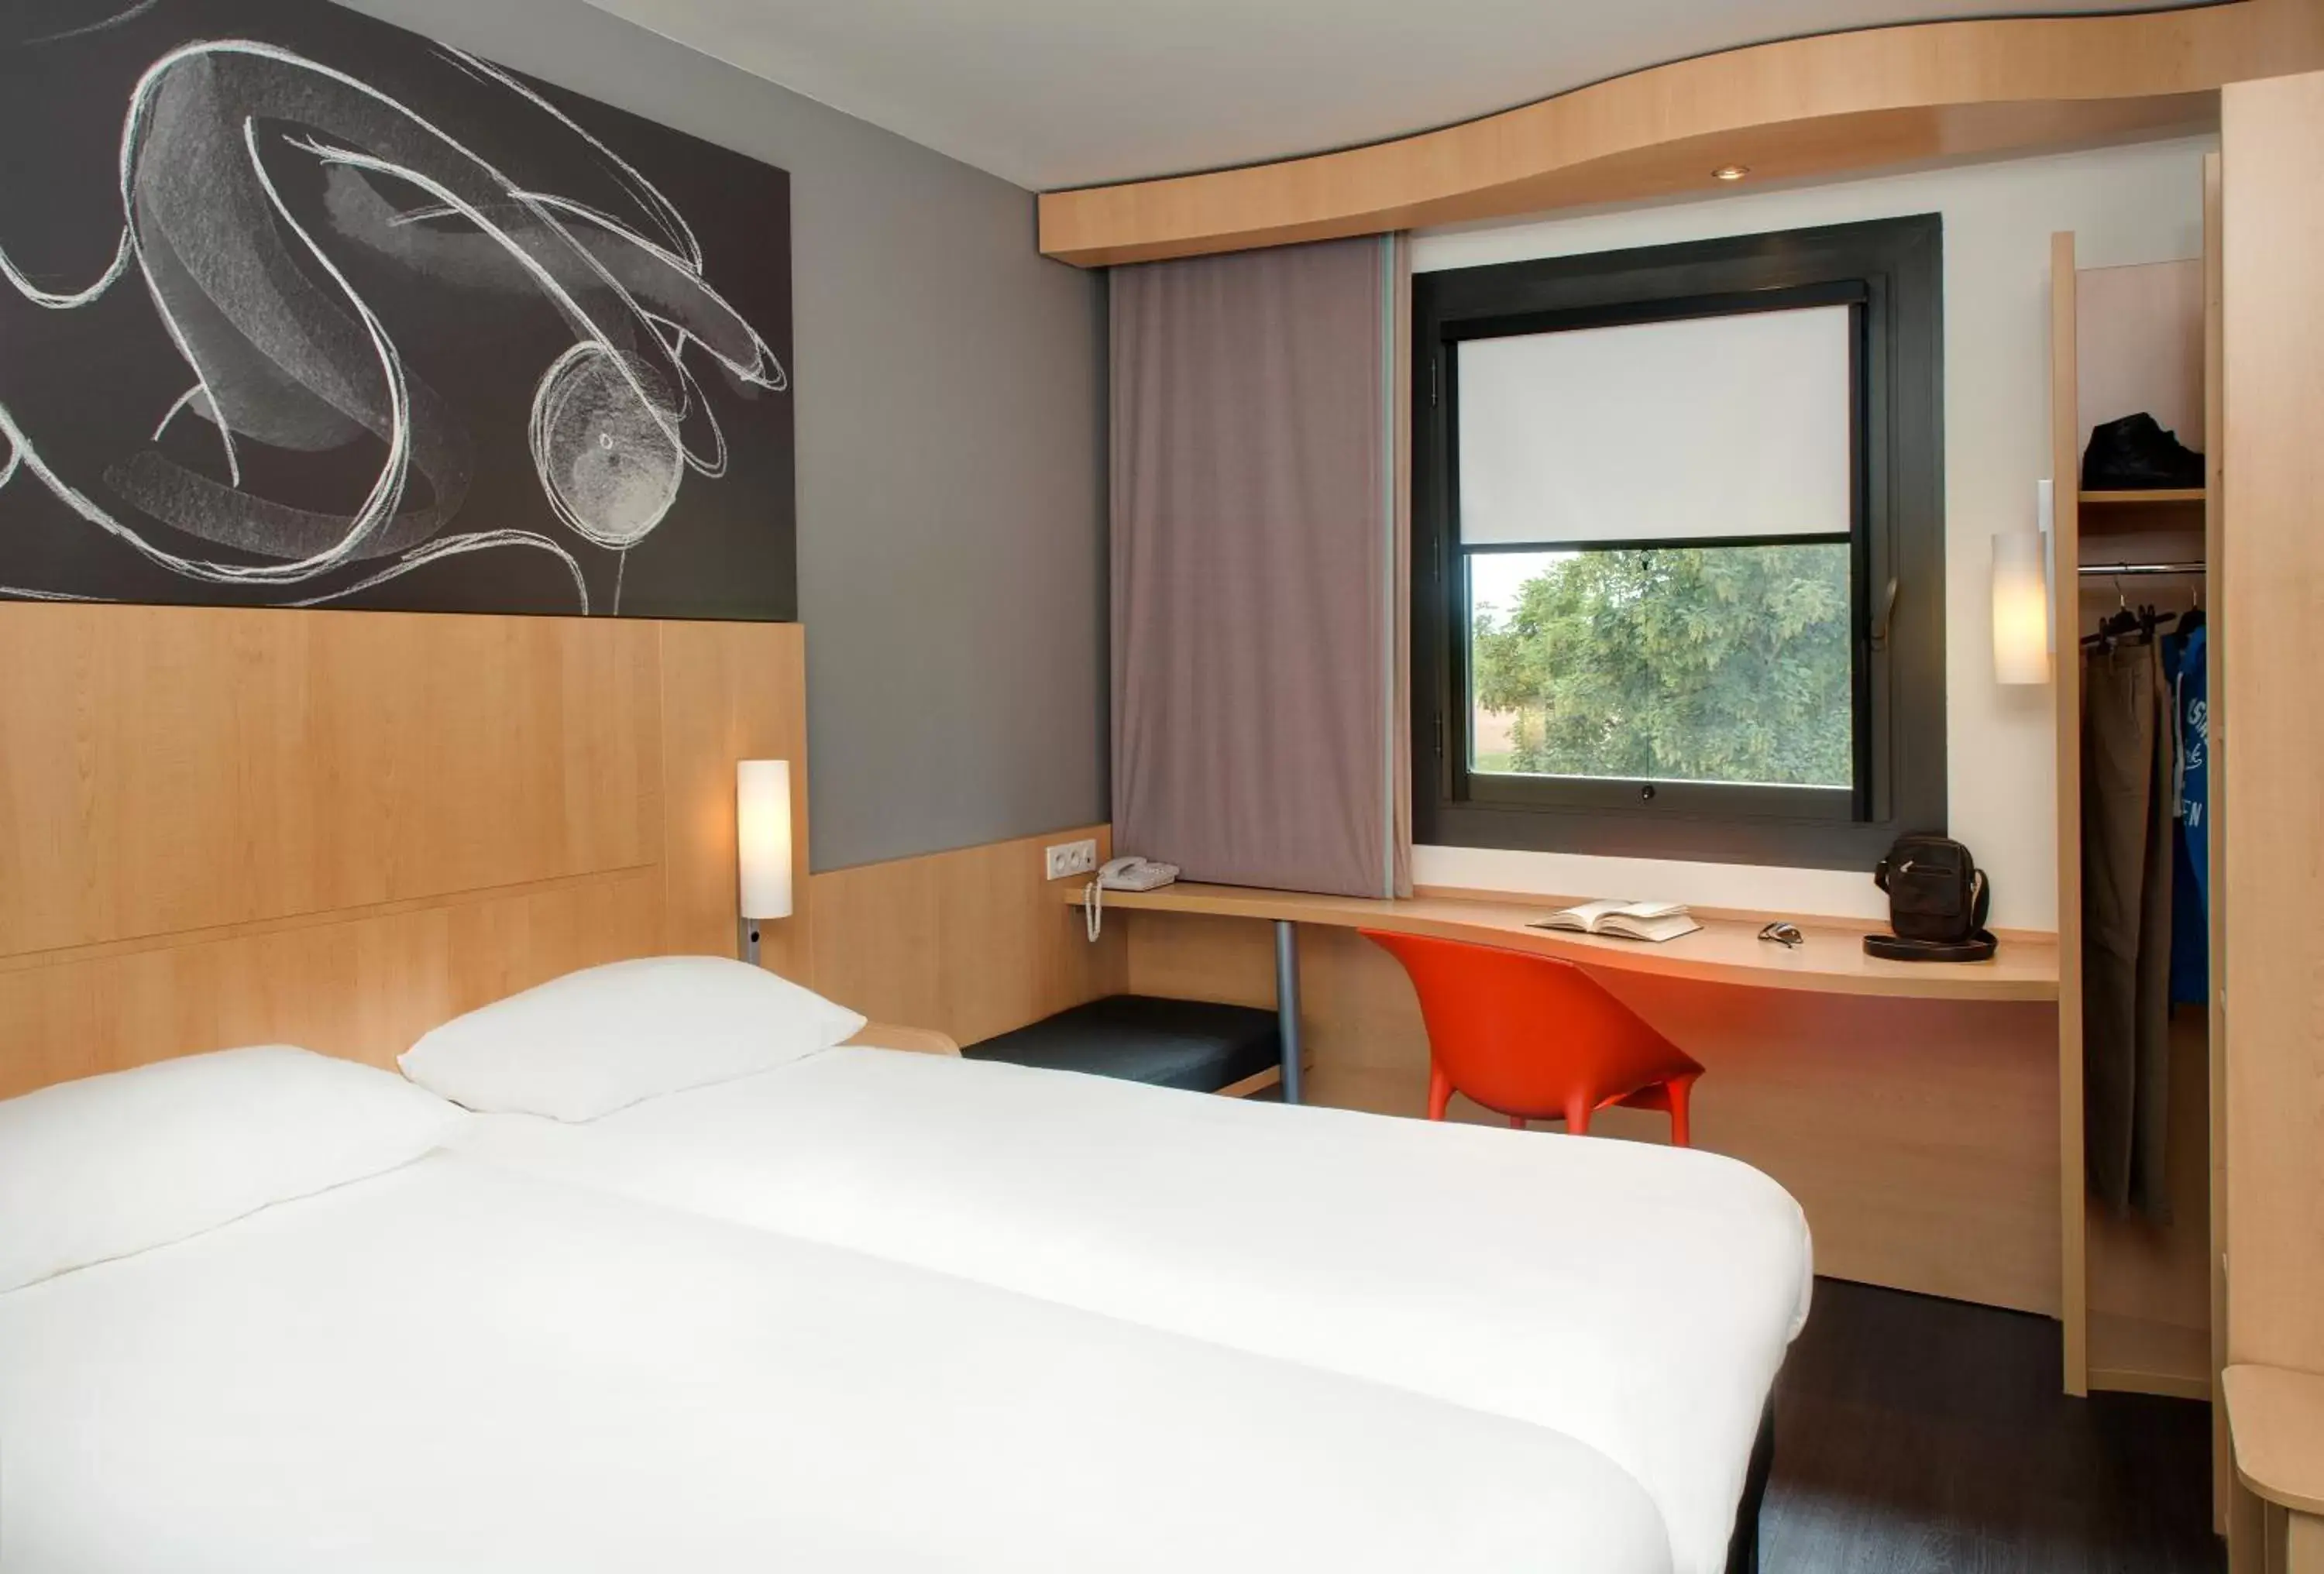 Bed, Room Photo in ibis Montceau les Mines